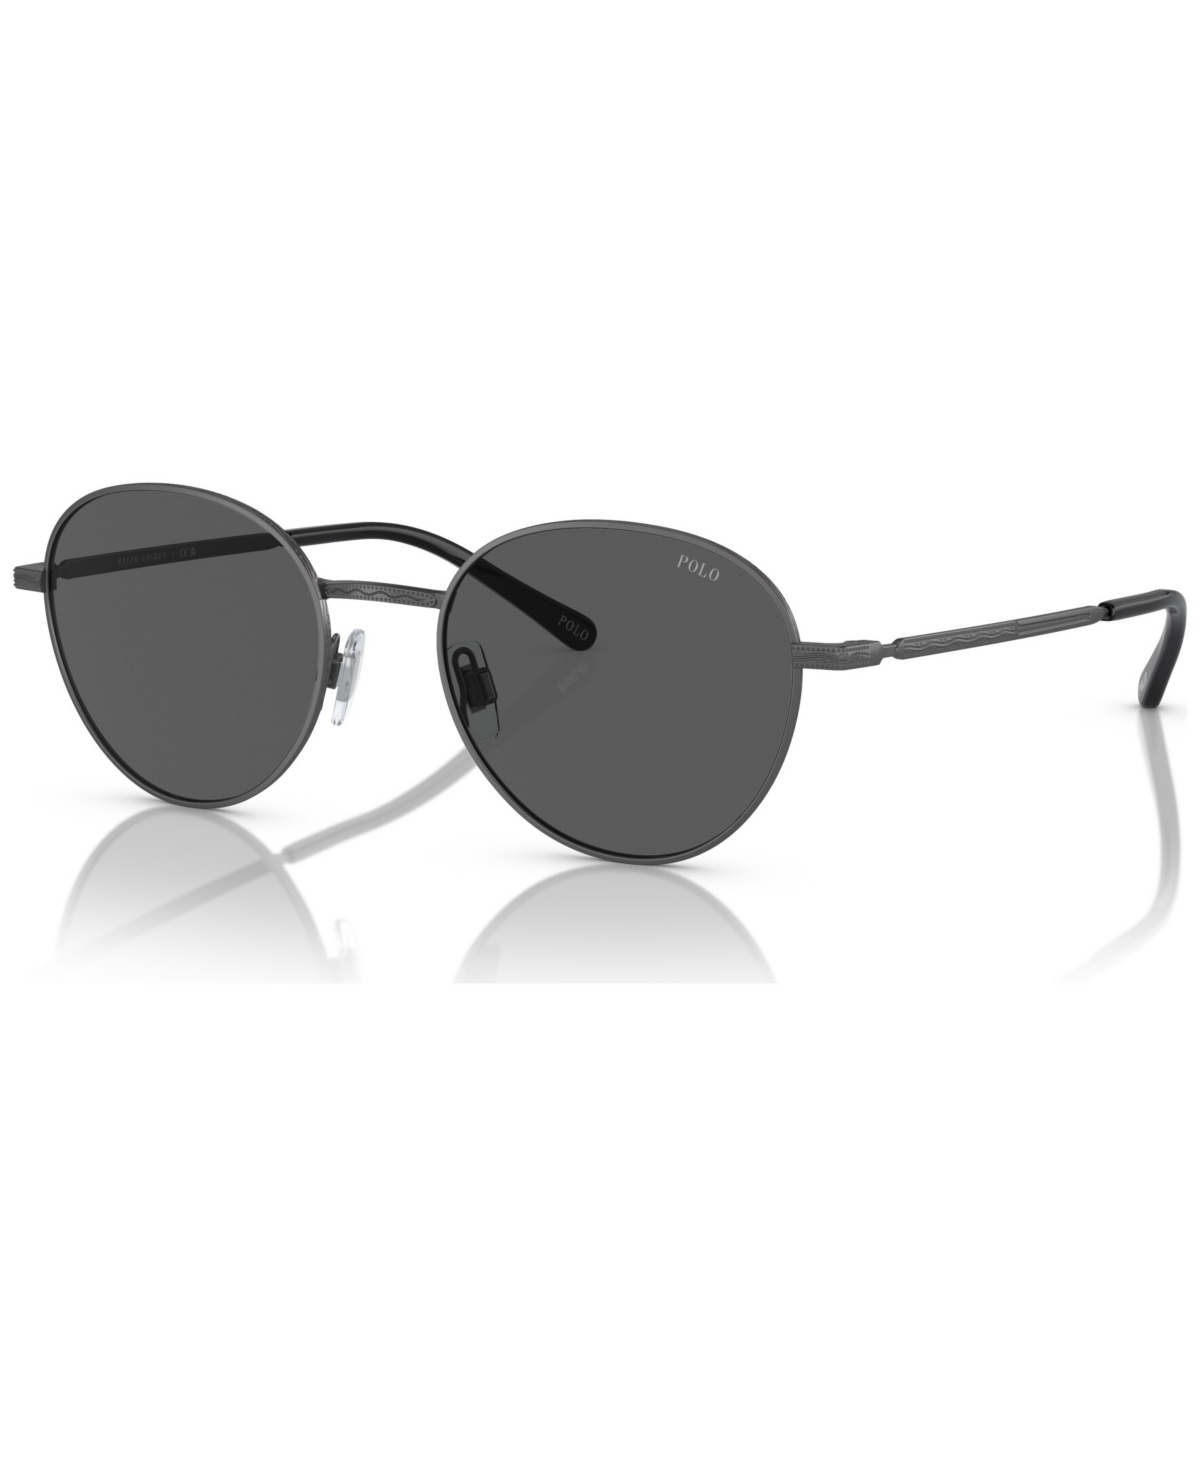 Polo Ralph Lauren Men's Sunglasses, Ph3144 In Semishiny Dark Gunmetal